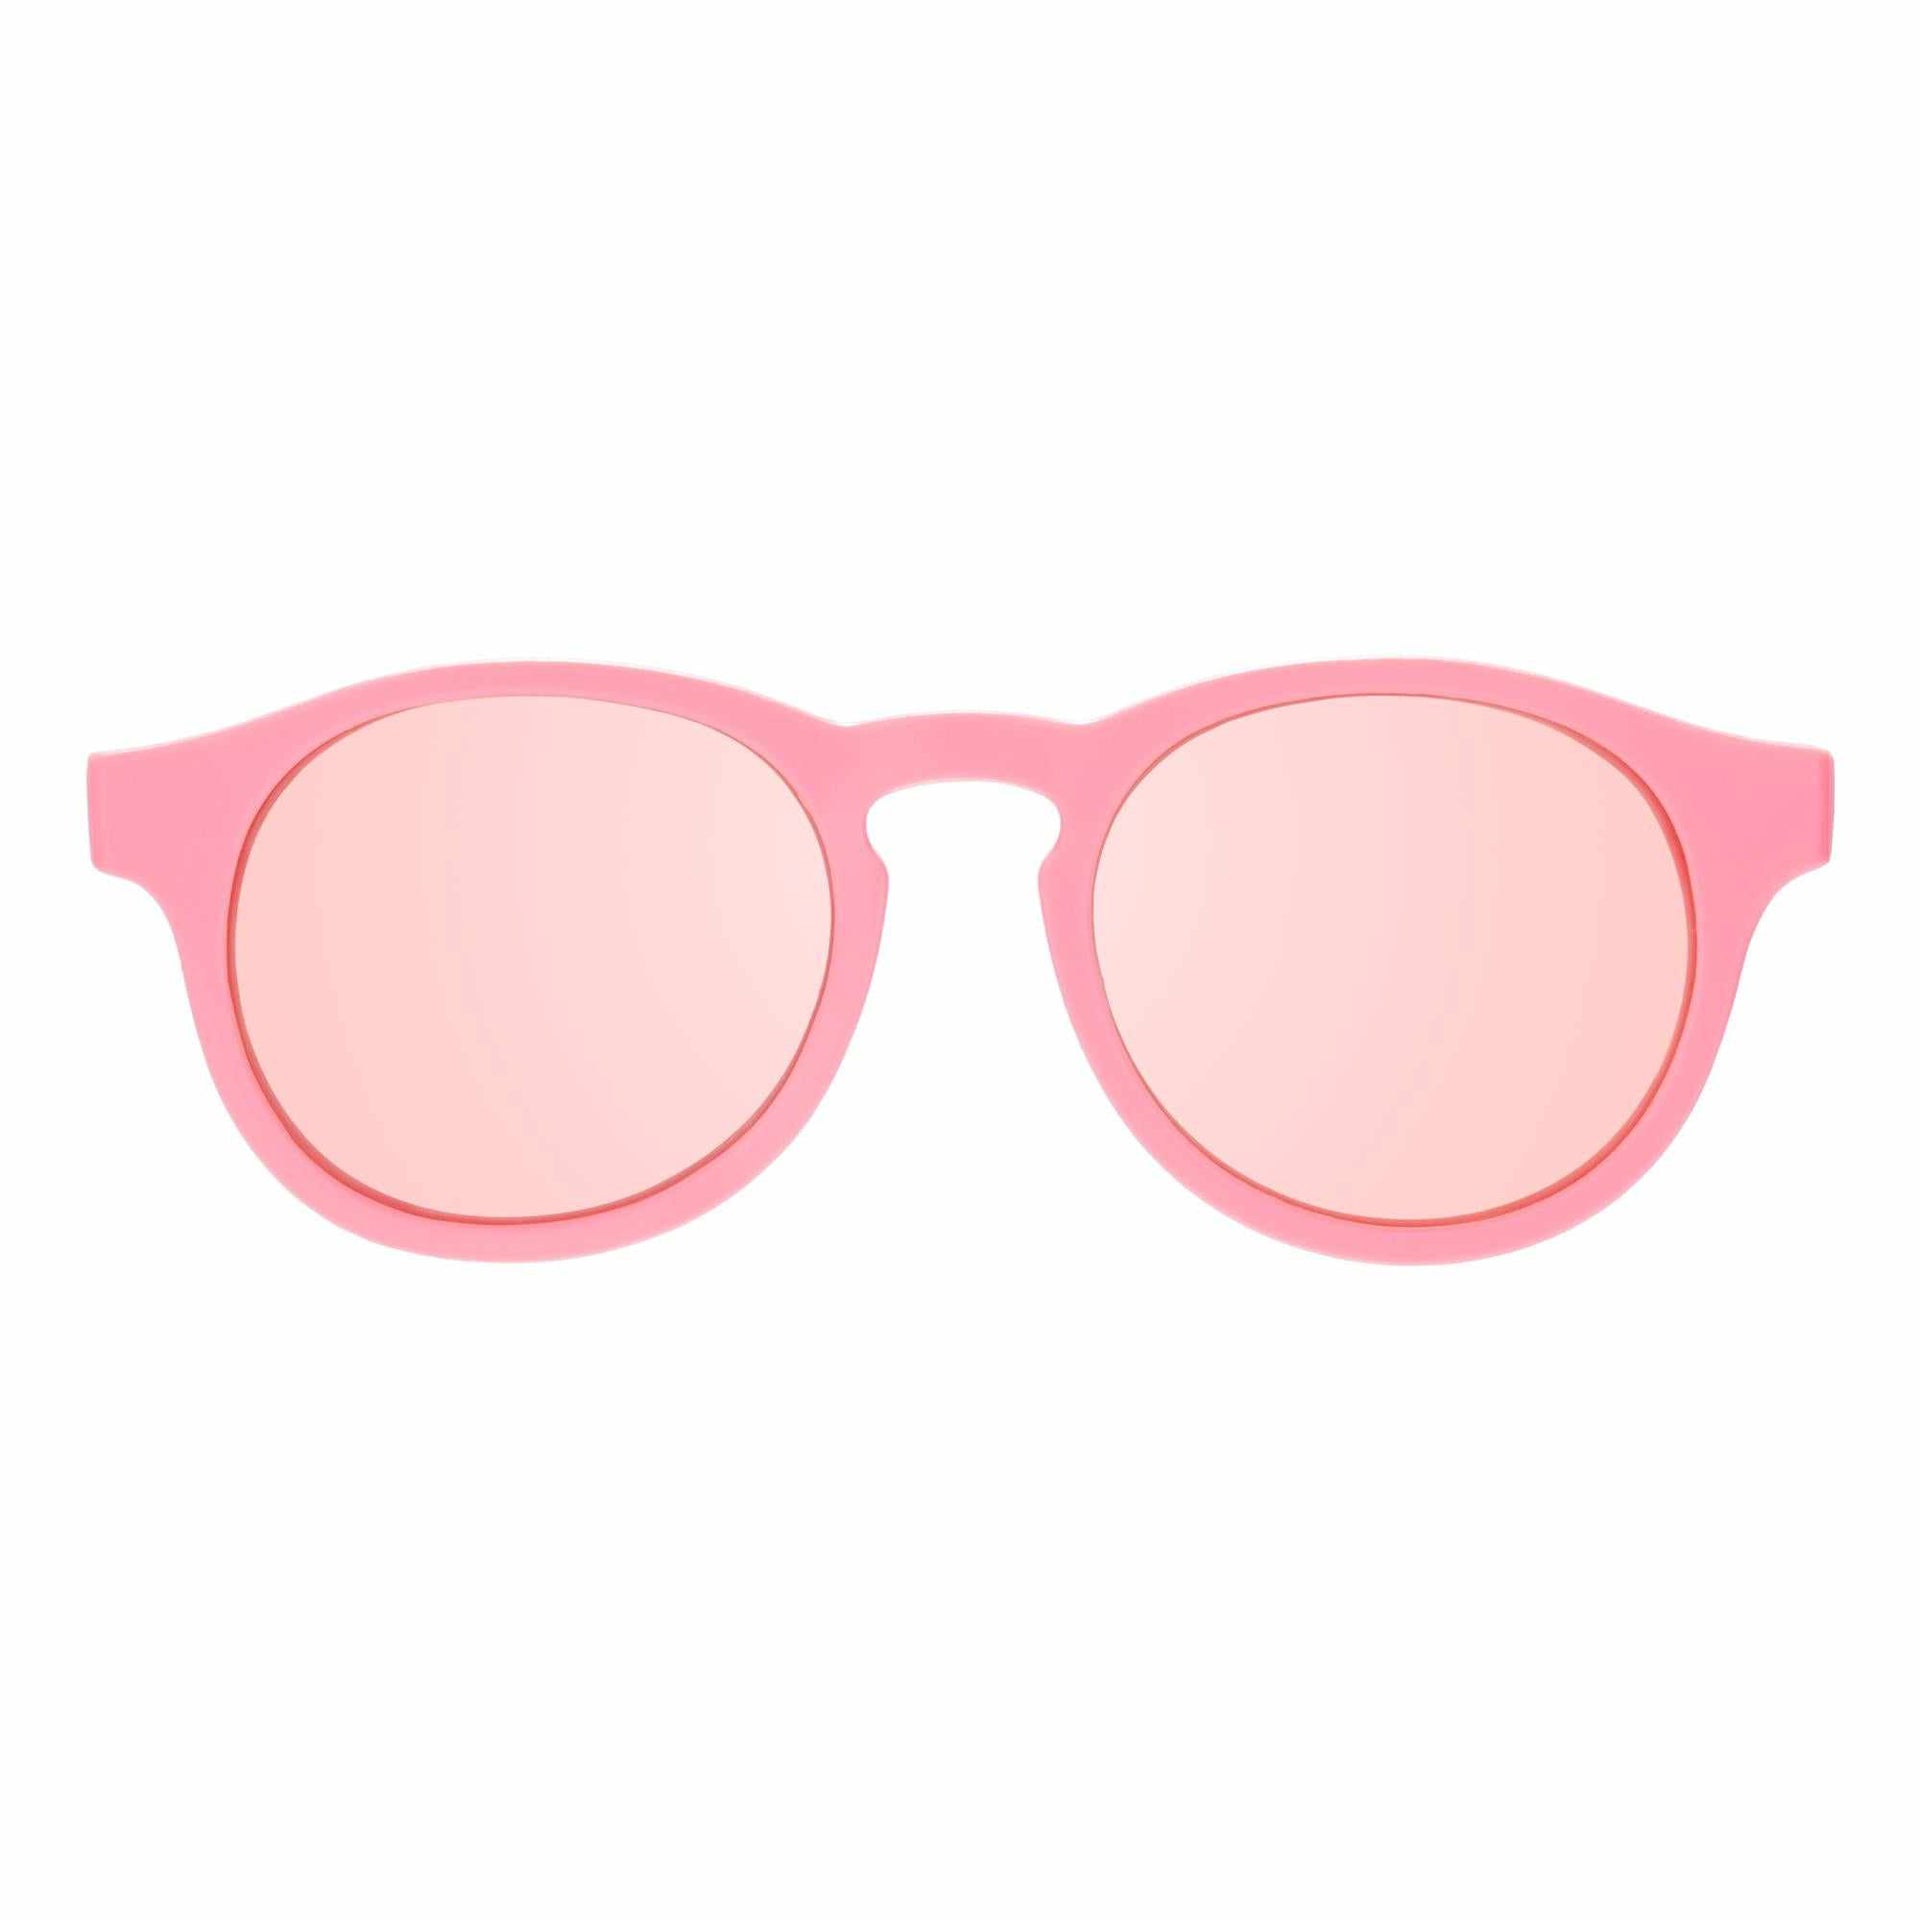 Shop Keytar Crystal/Blue Vintage Sports Sunglasses for Women